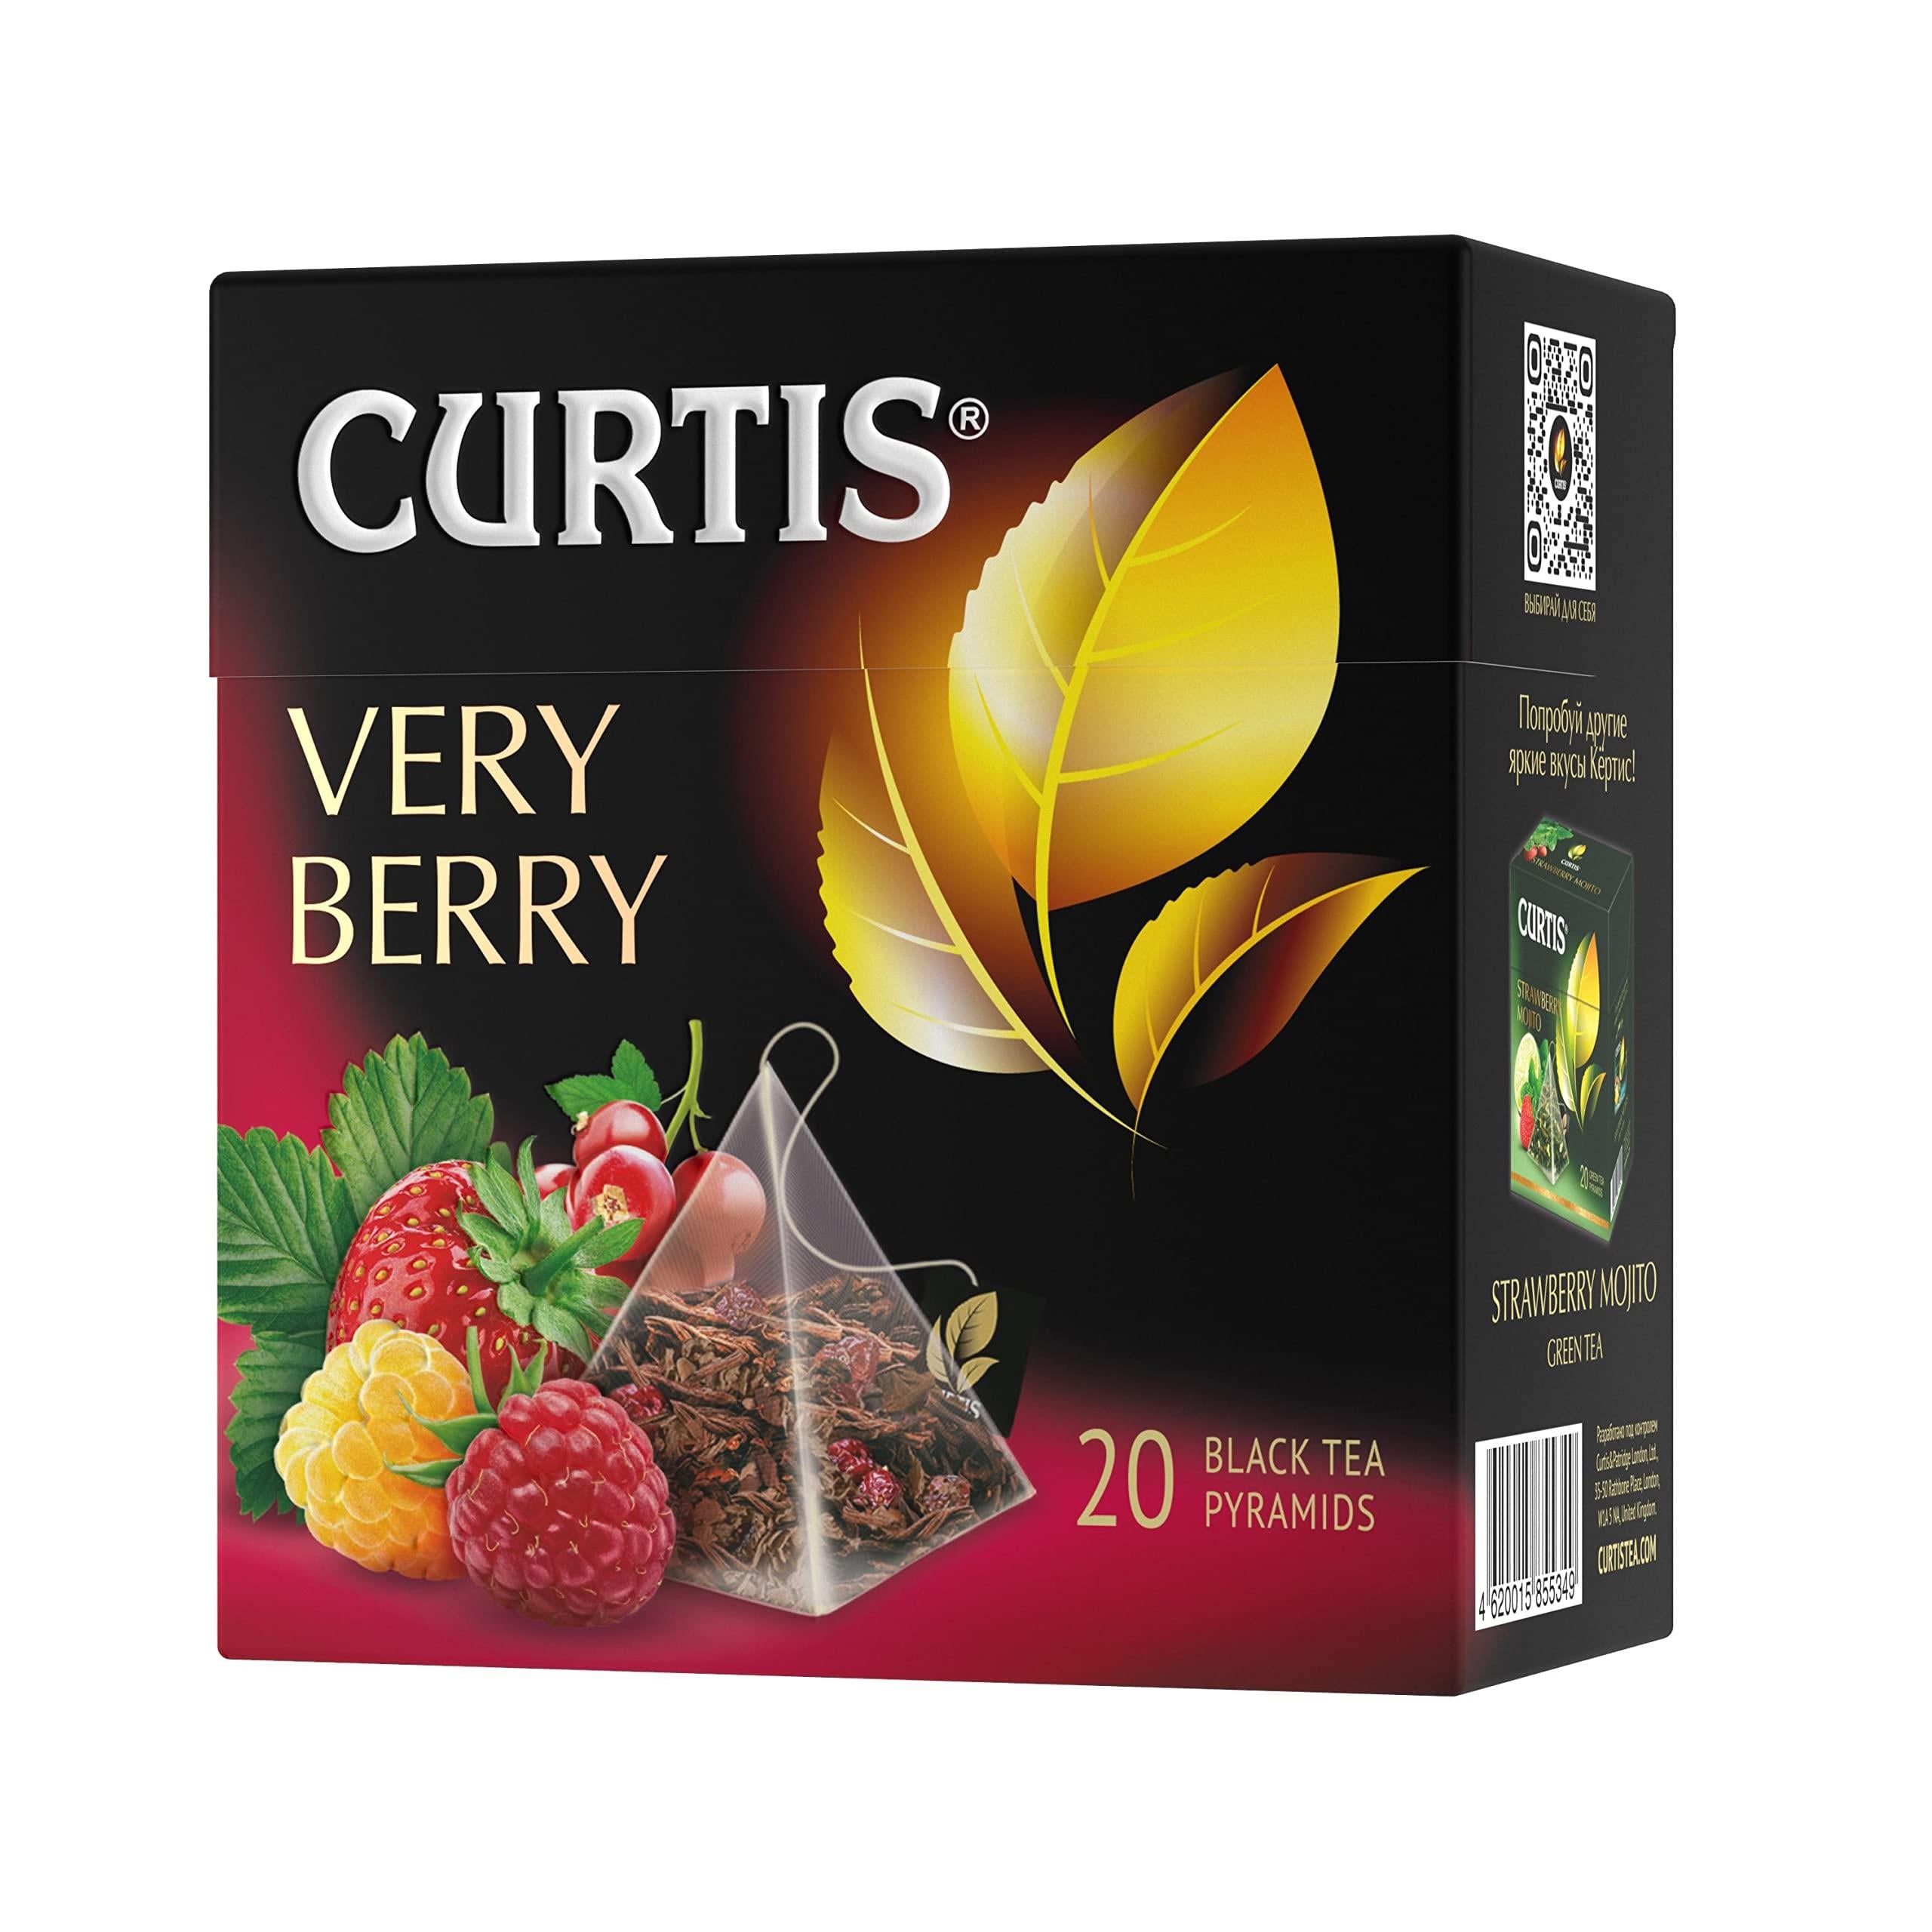 CURTIS Black Tea Very Berry (20 Tea Pyramid Sachets) with Wild Berries Mix